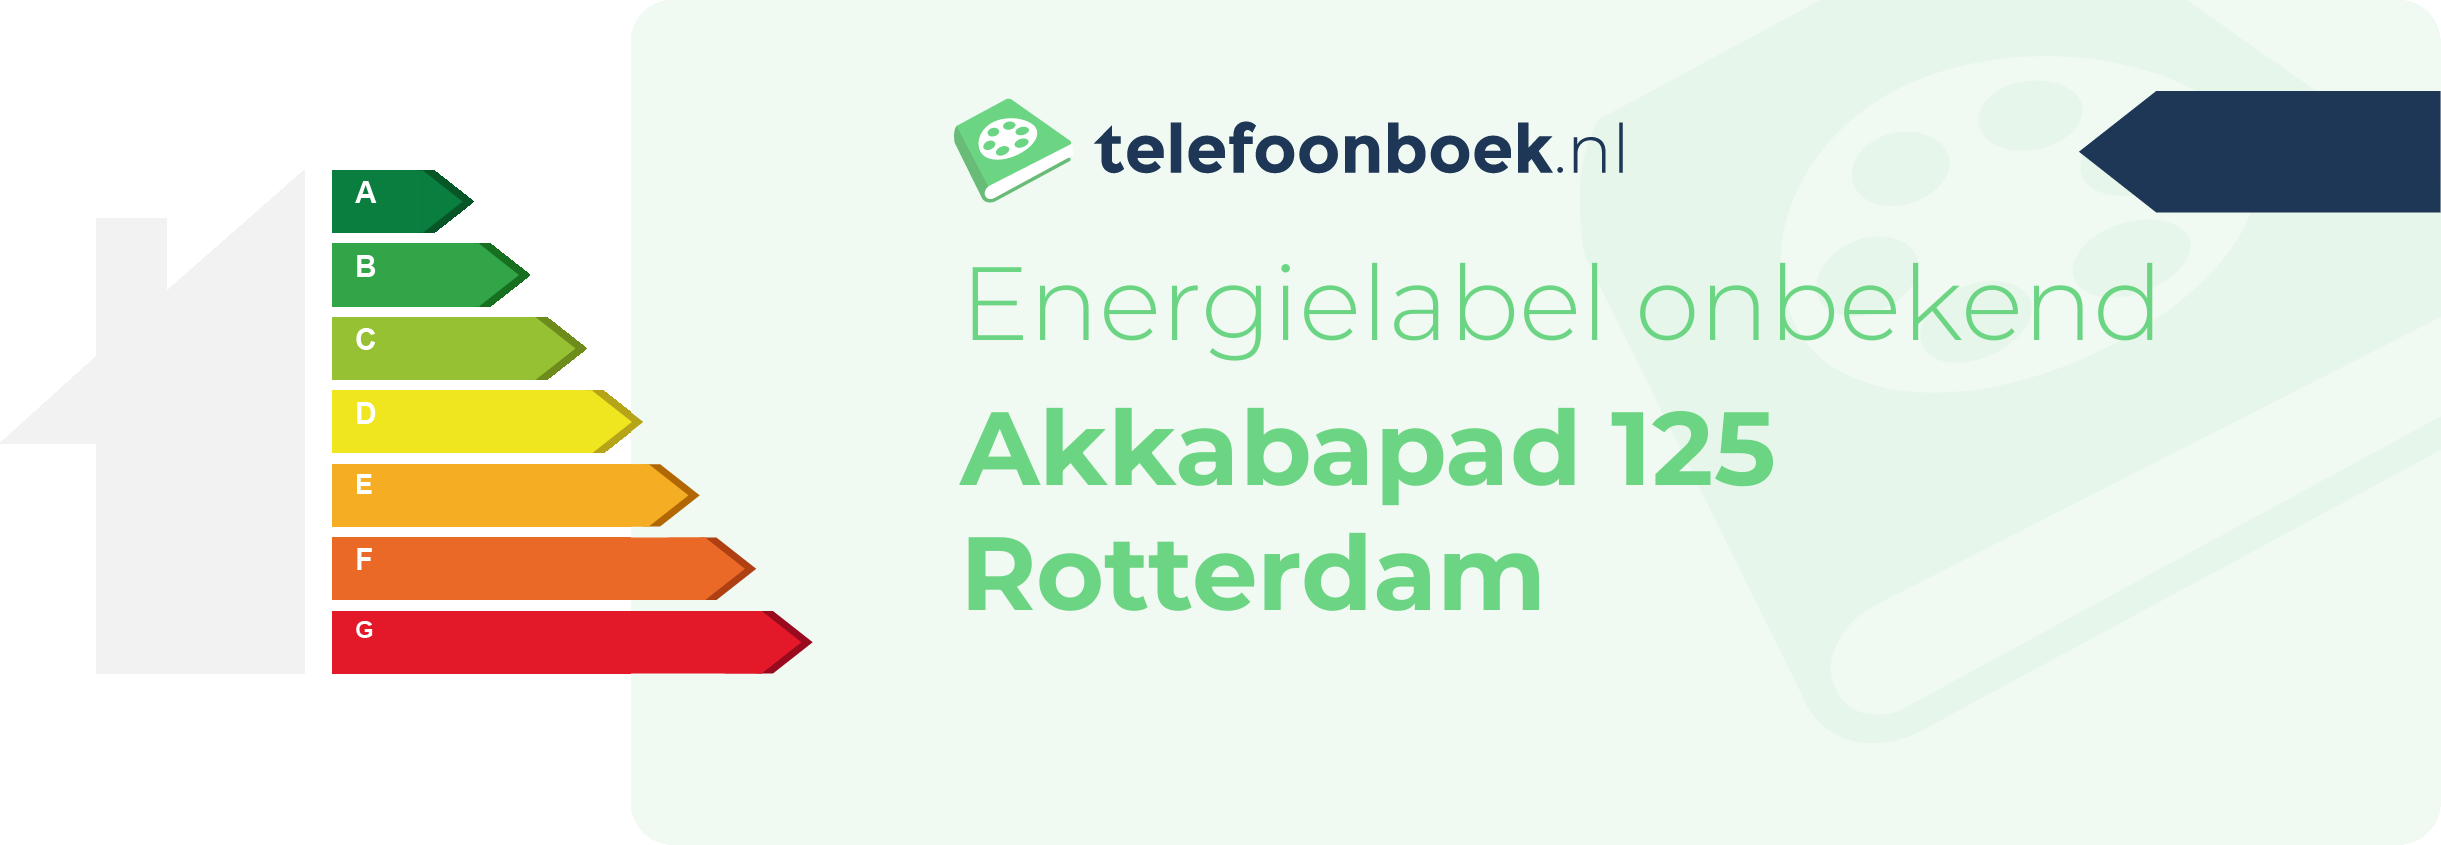 Energielabel Akkabapad 125 Rotterdam